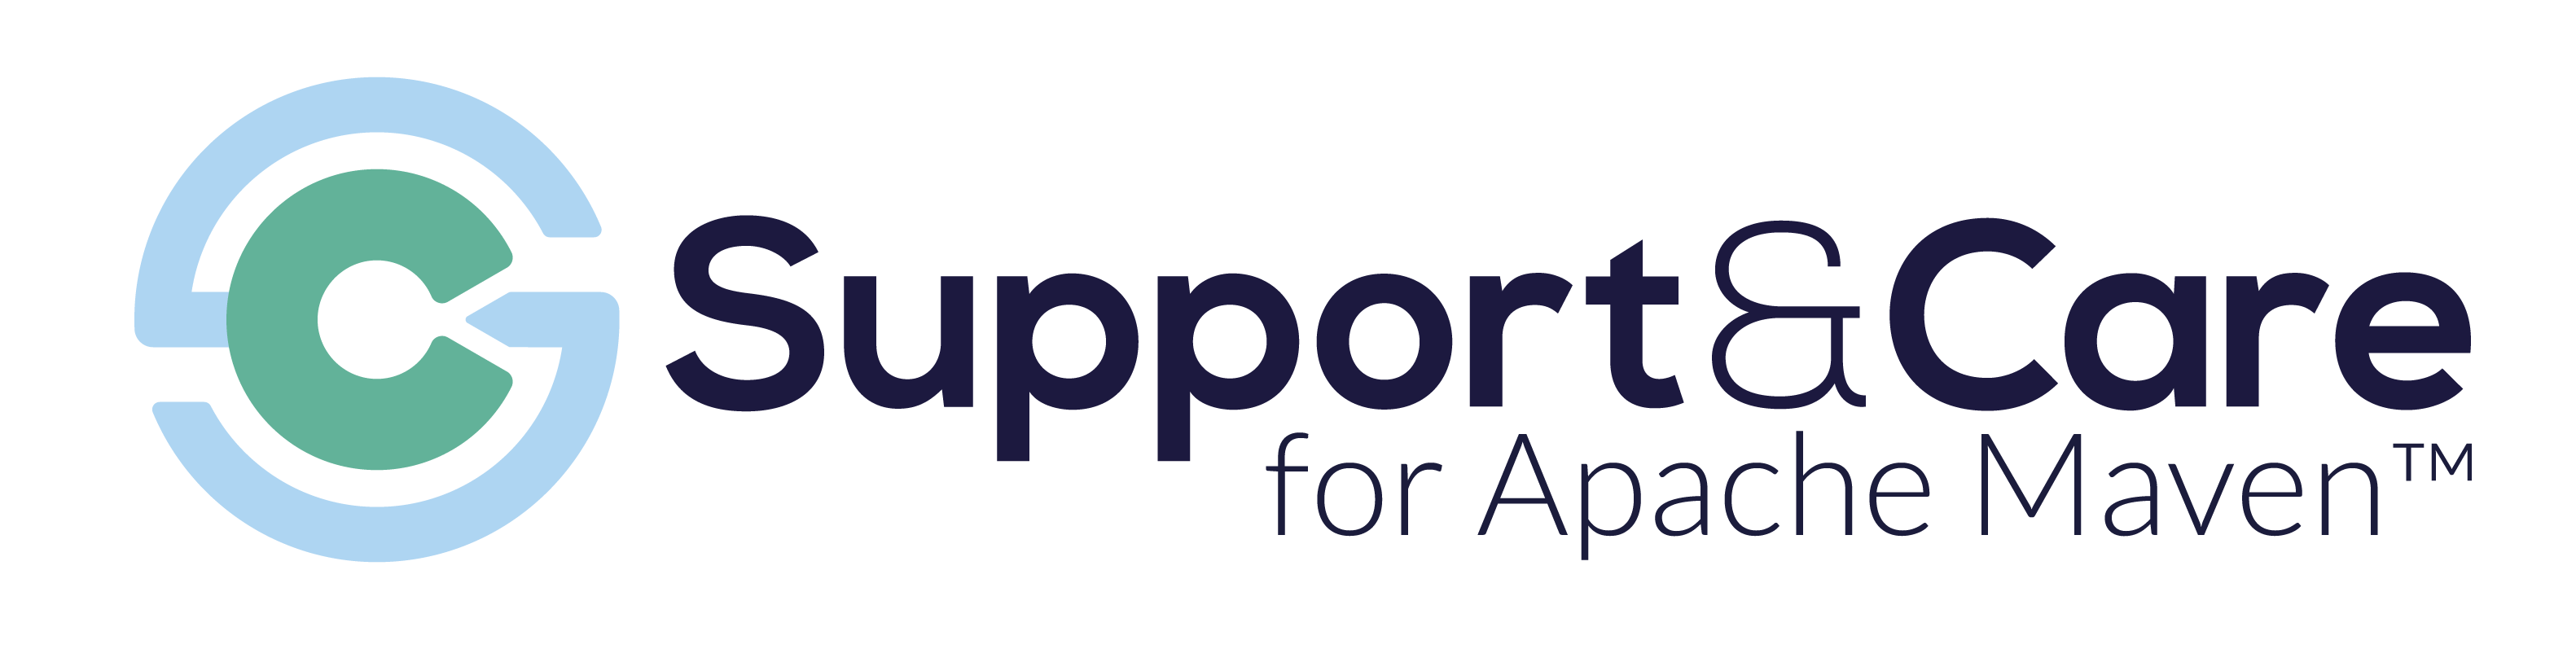 Support & Care for Apache Maven&trade; Logo